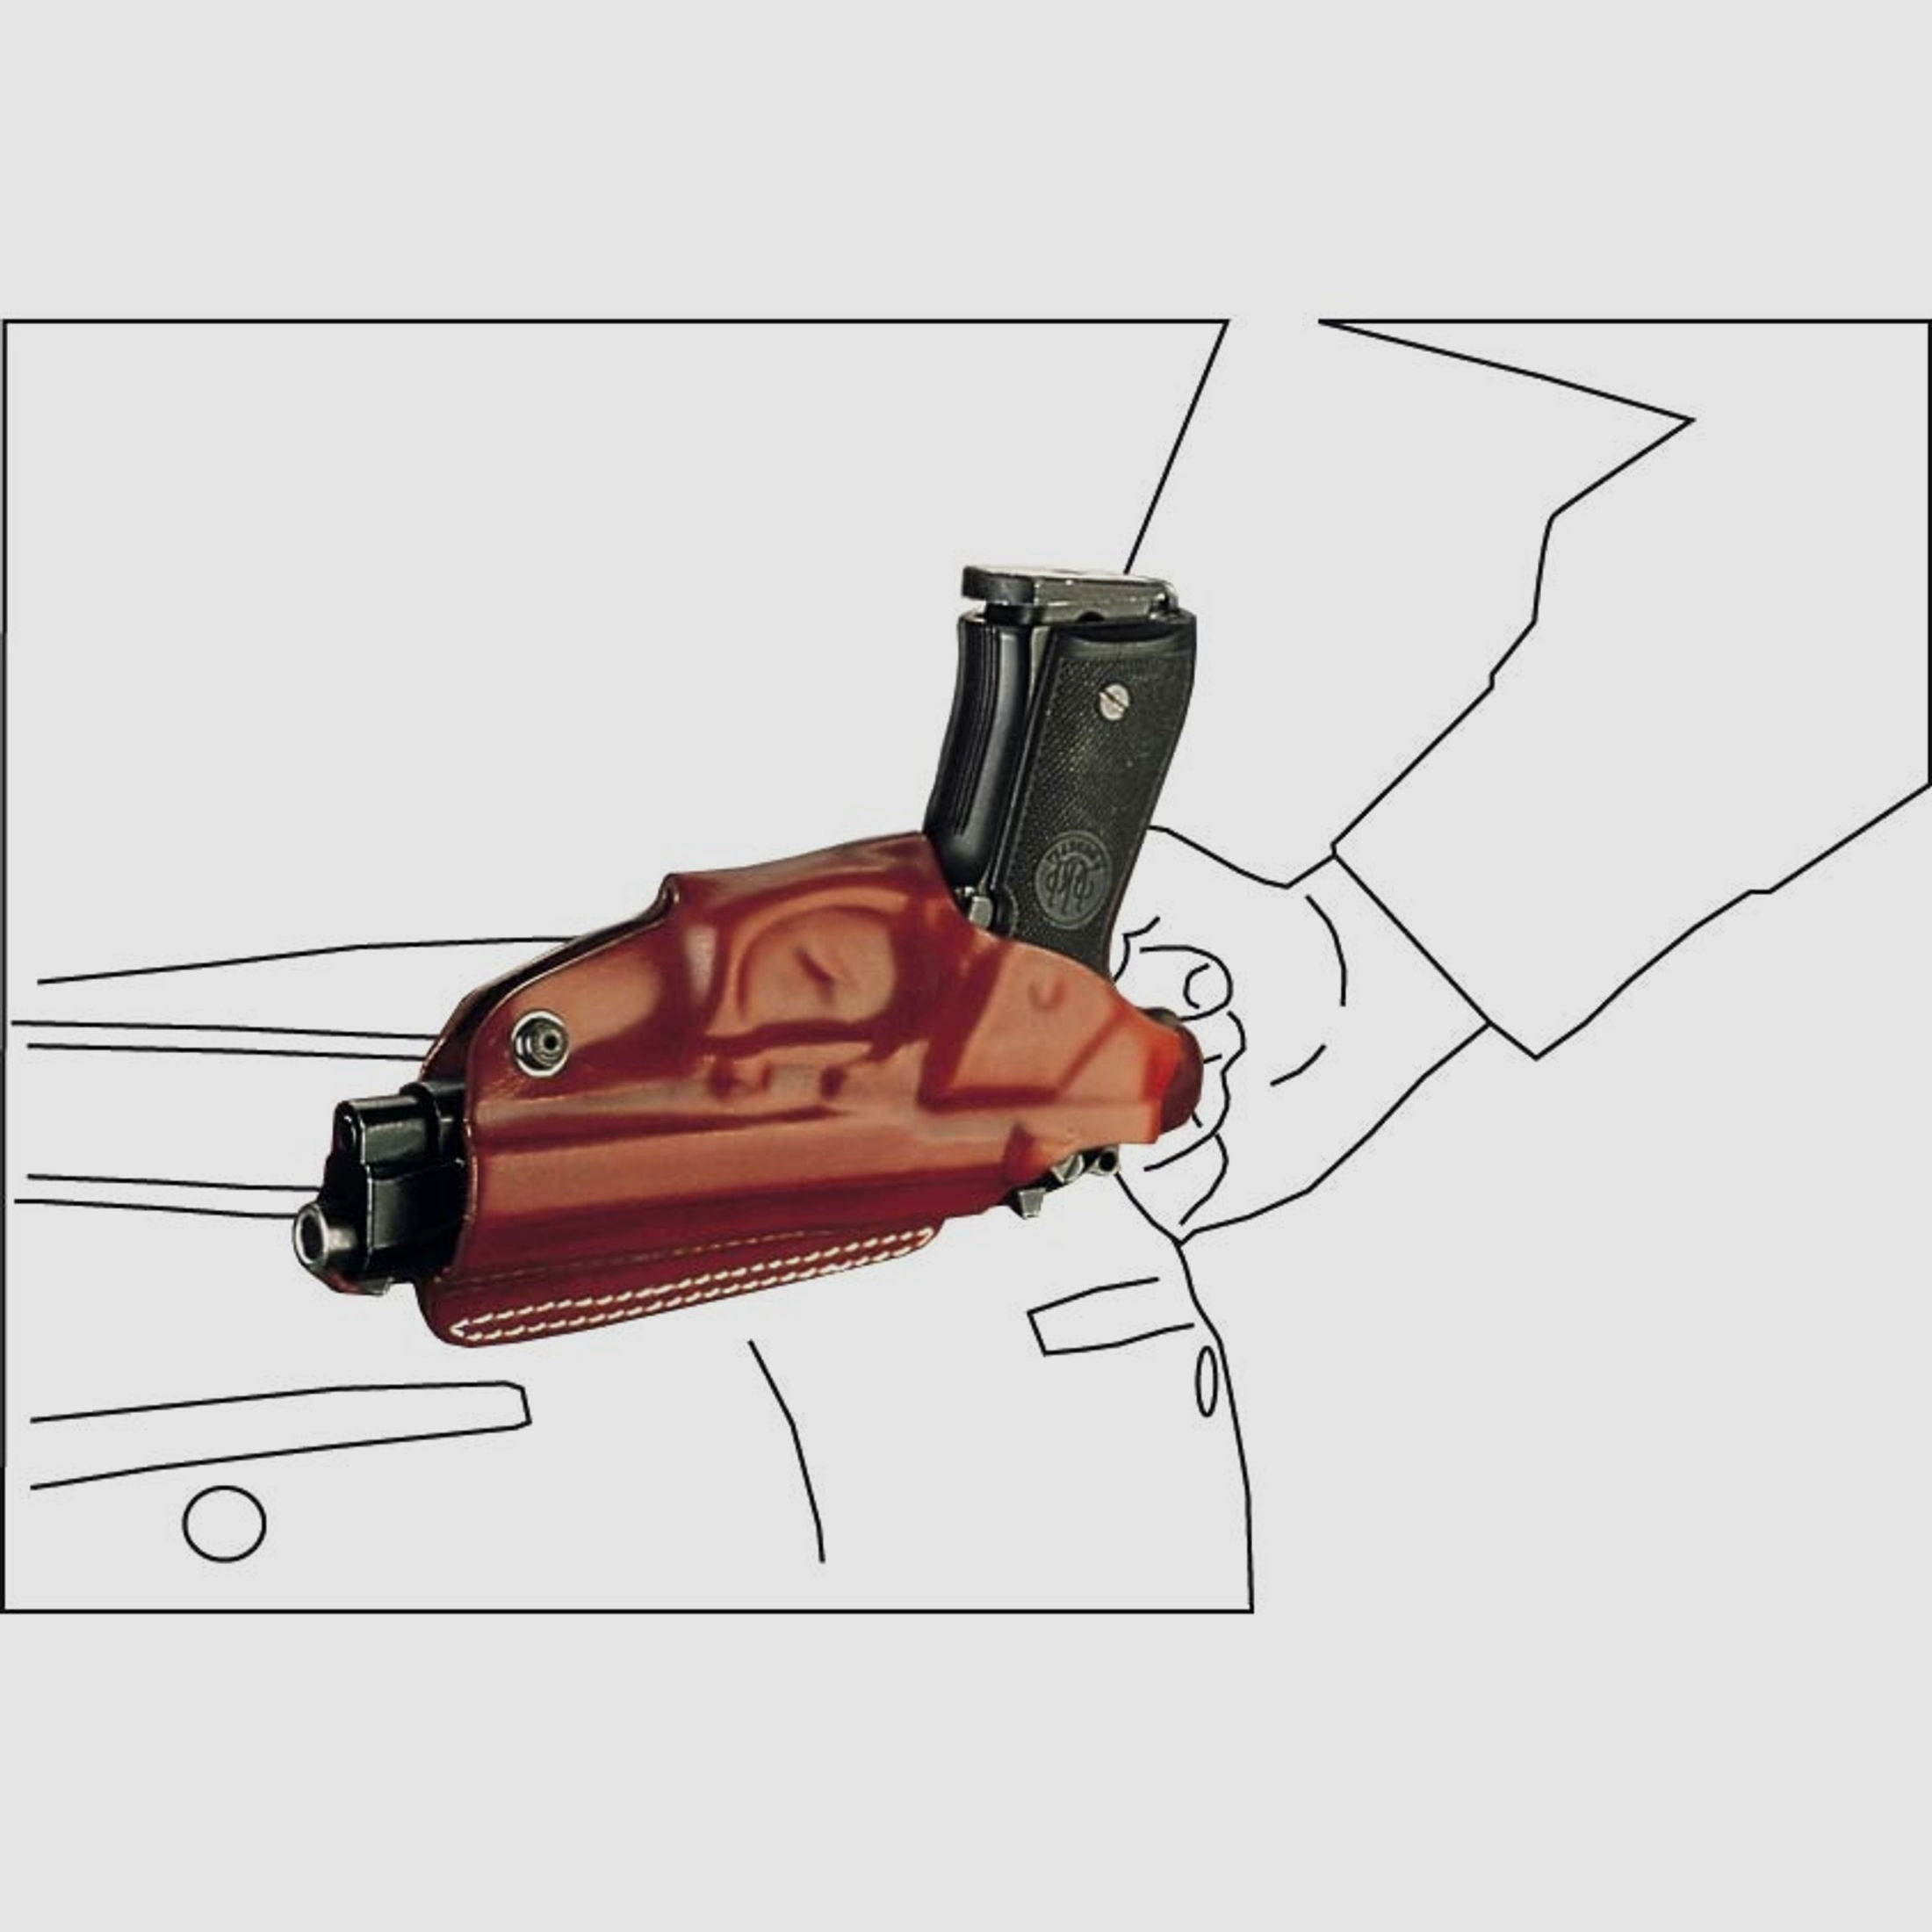 Mehrzweck-Schulterholster/Gürtelholster "Miami" Beretta APX /Compact/Centurion-Braun-Linkshänder